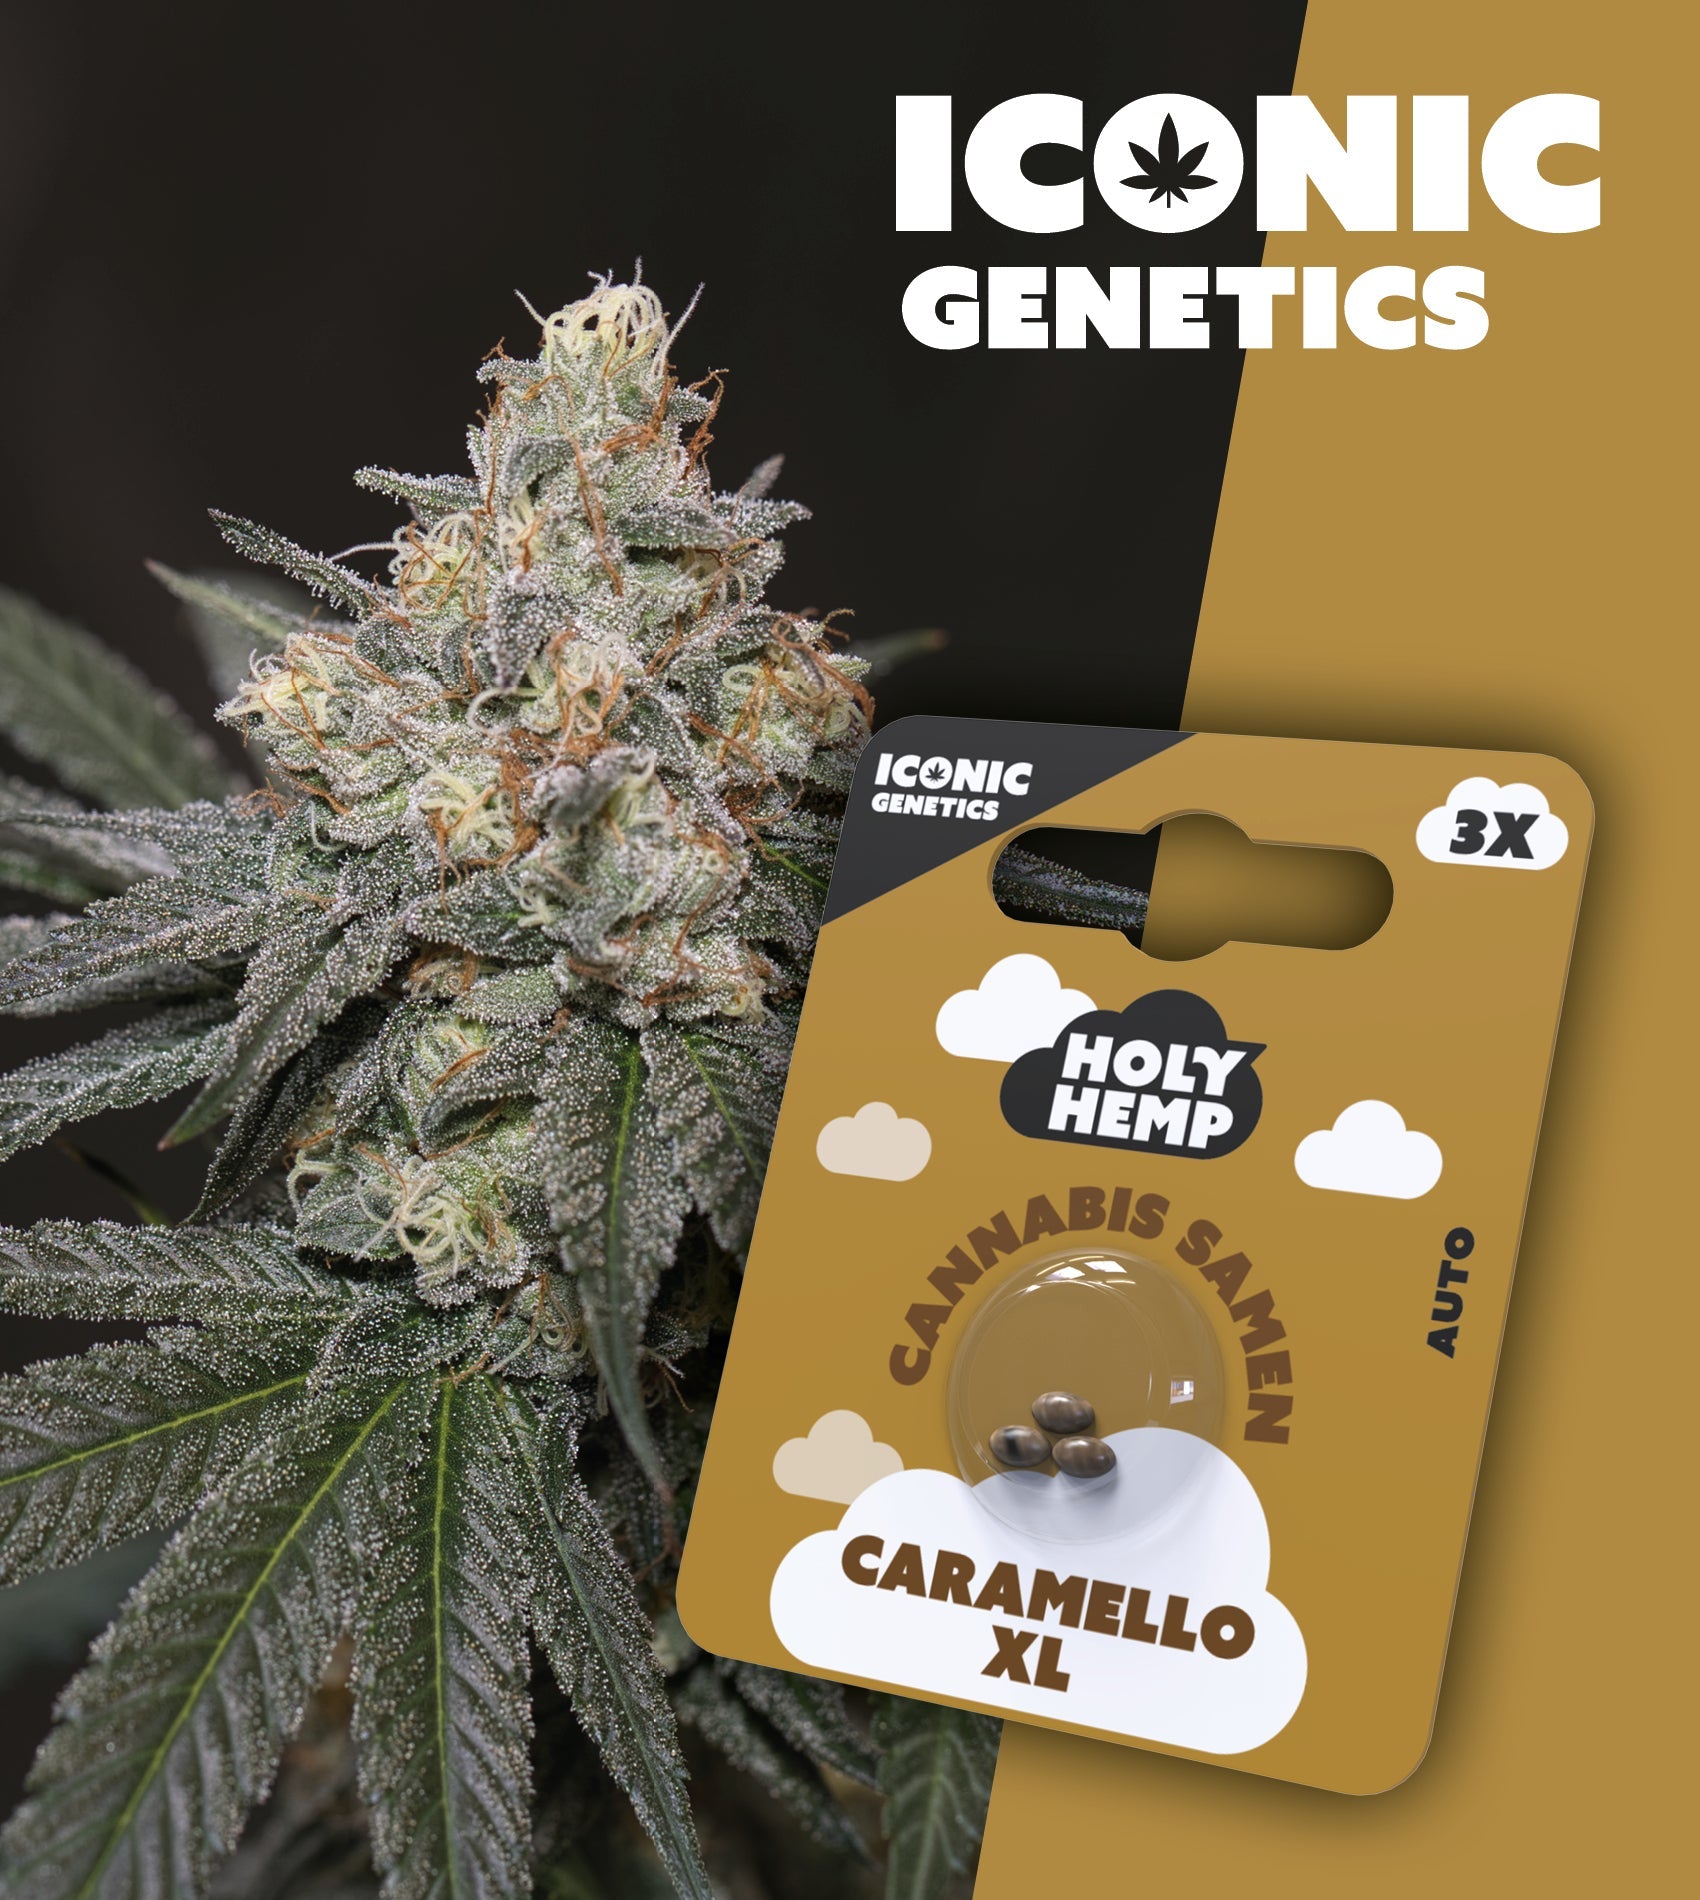 Holy Hemp Cannabissamen Caramello XL Auto Flowering